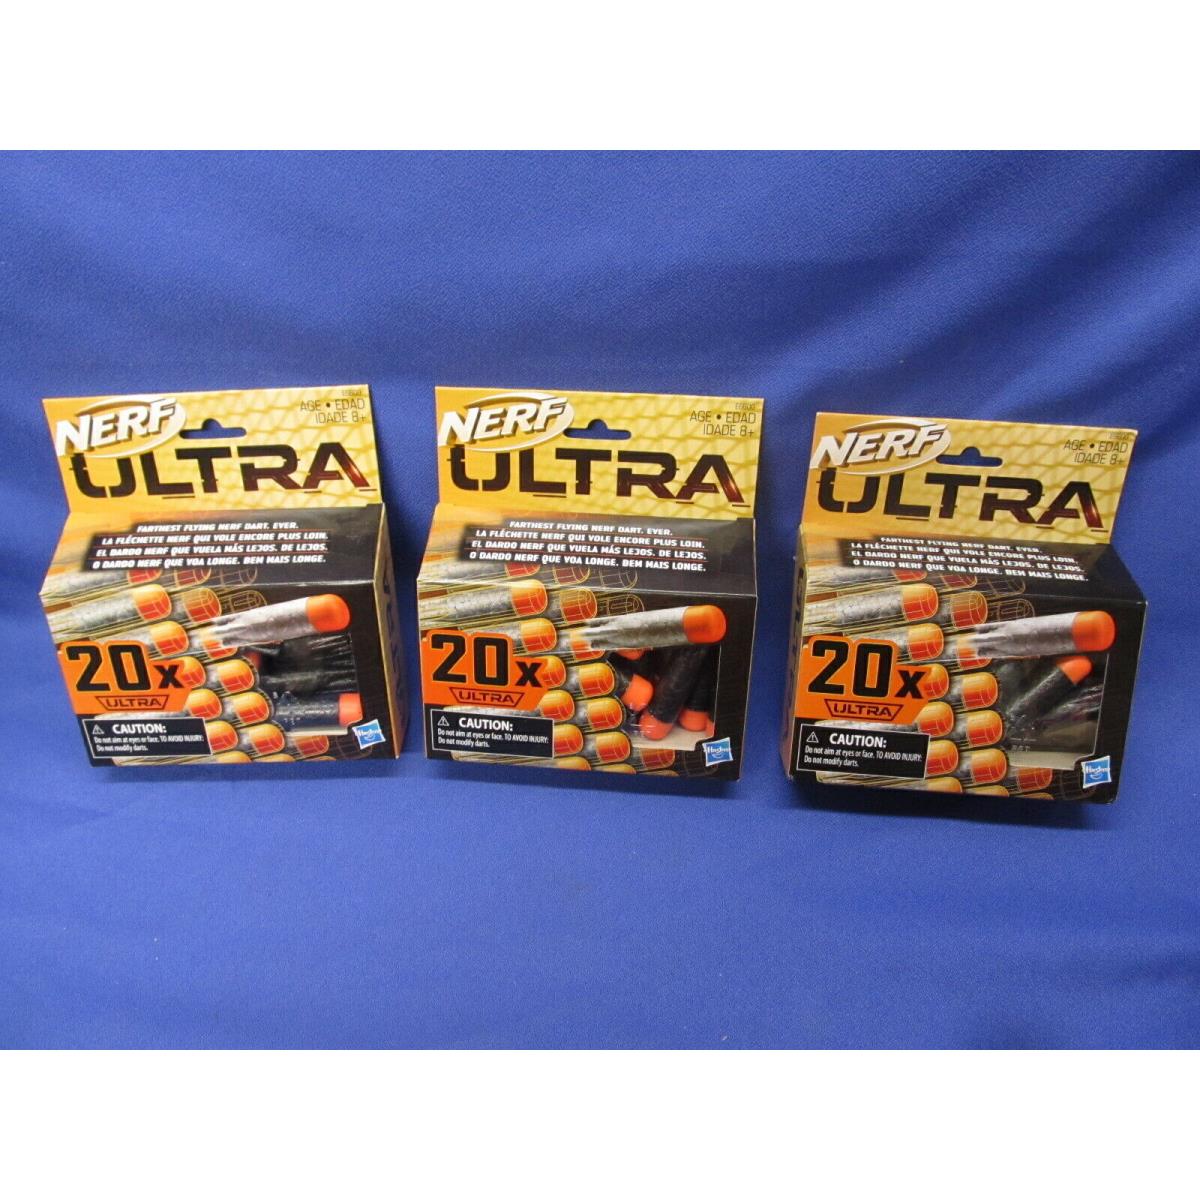 60 Nerf Ultra Darts 3 Packs E6600 20 x 3